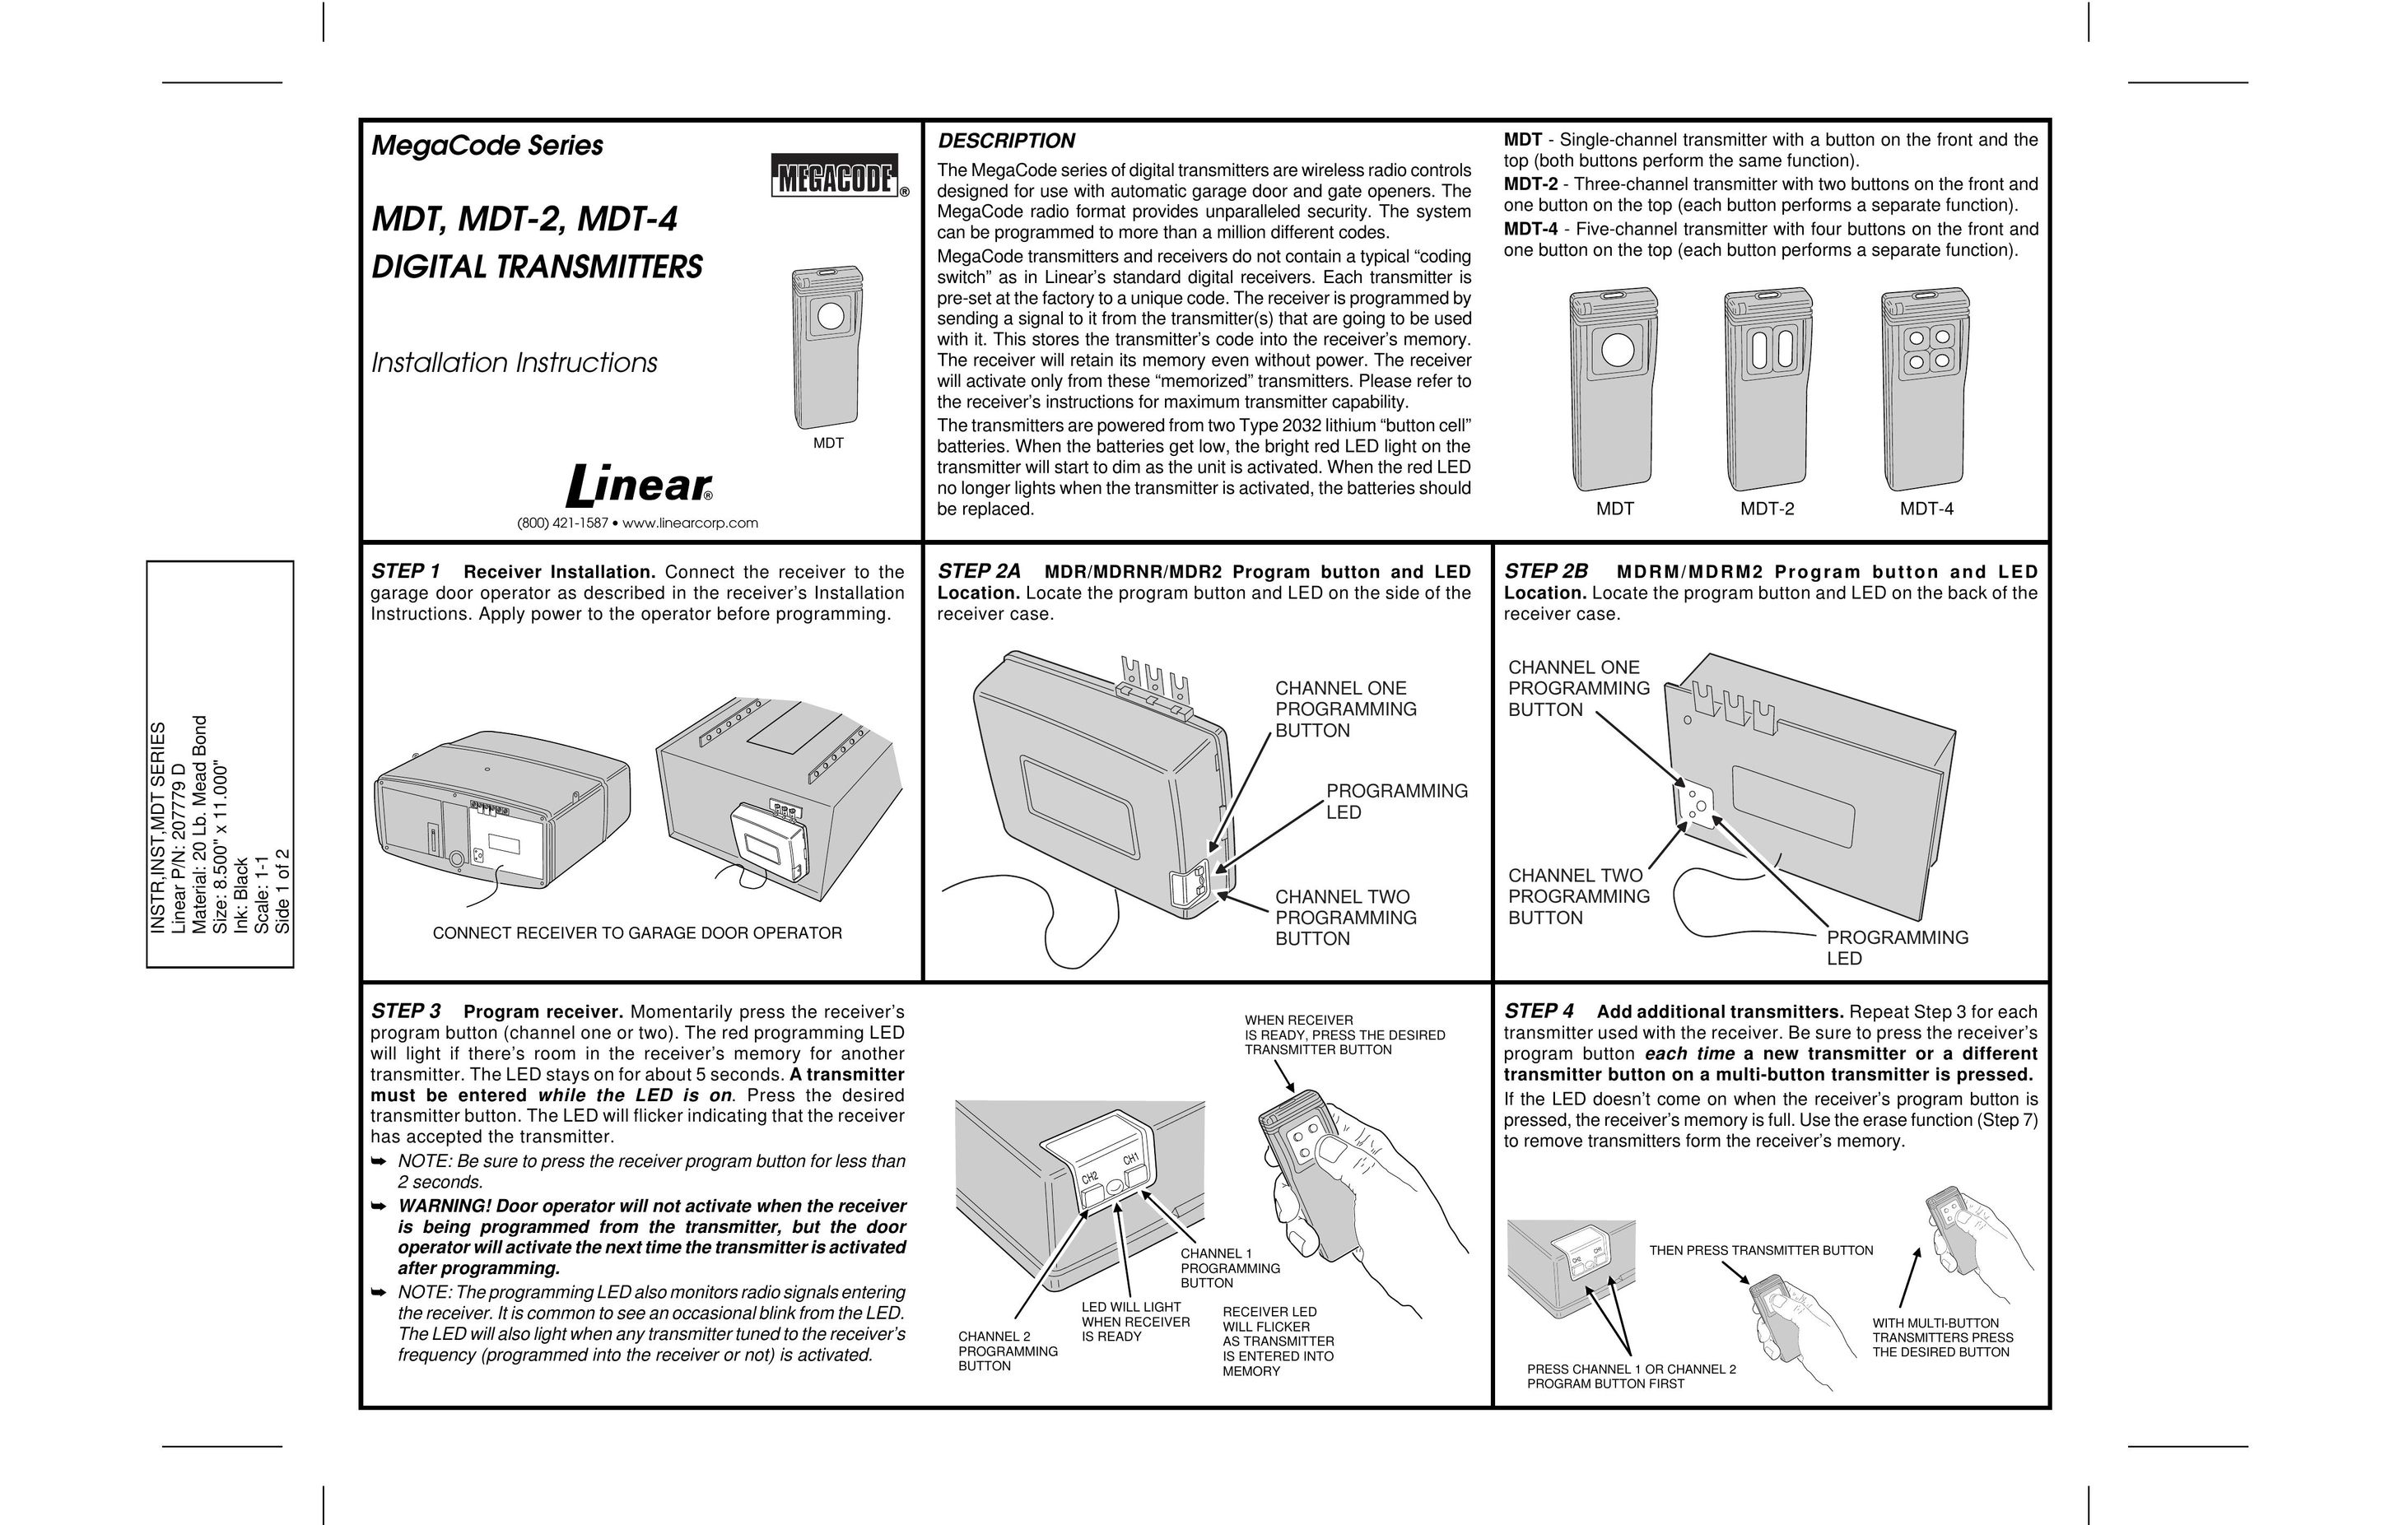 Linear MDT-2 Satellite Radio User Manual